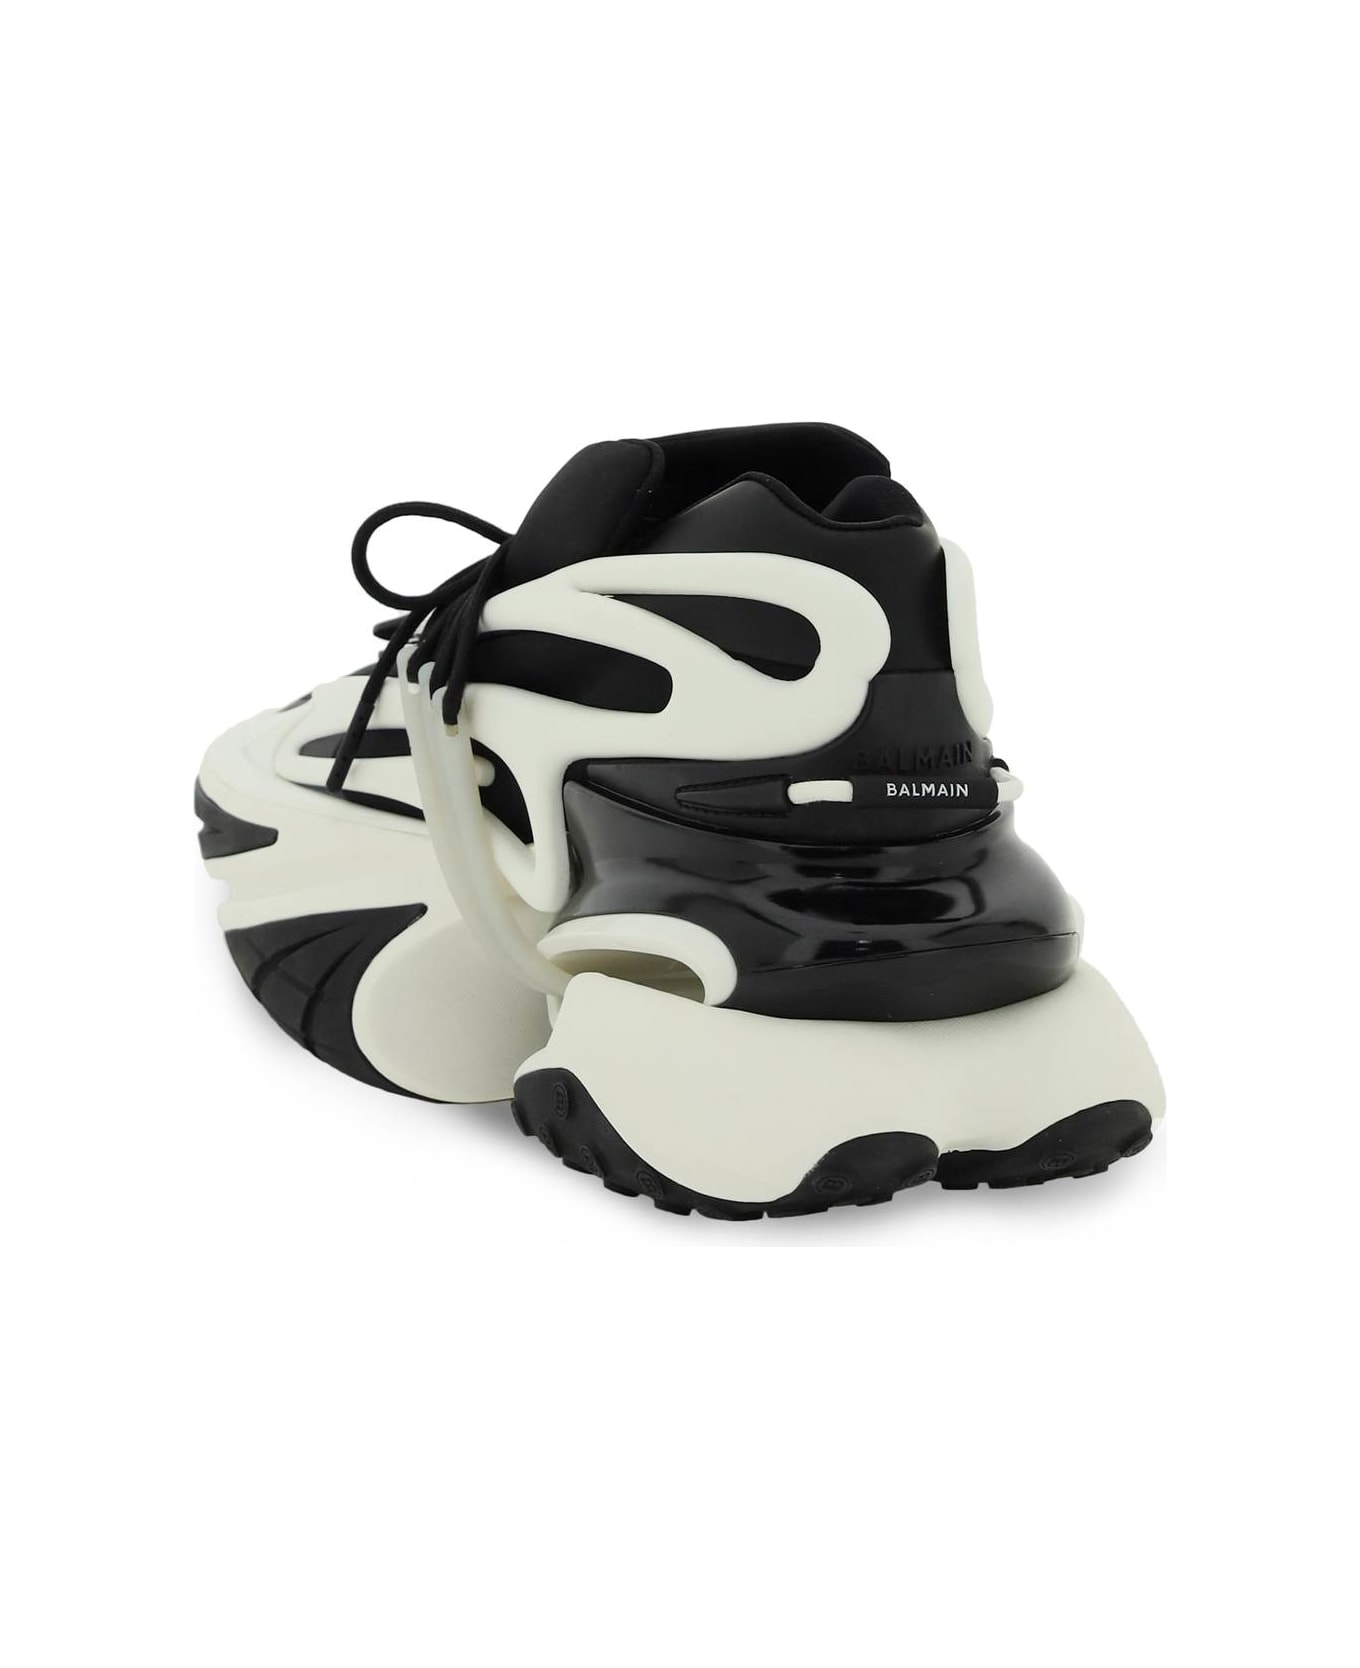 Balmain Unicorn Sneakers - Noir/Blanc